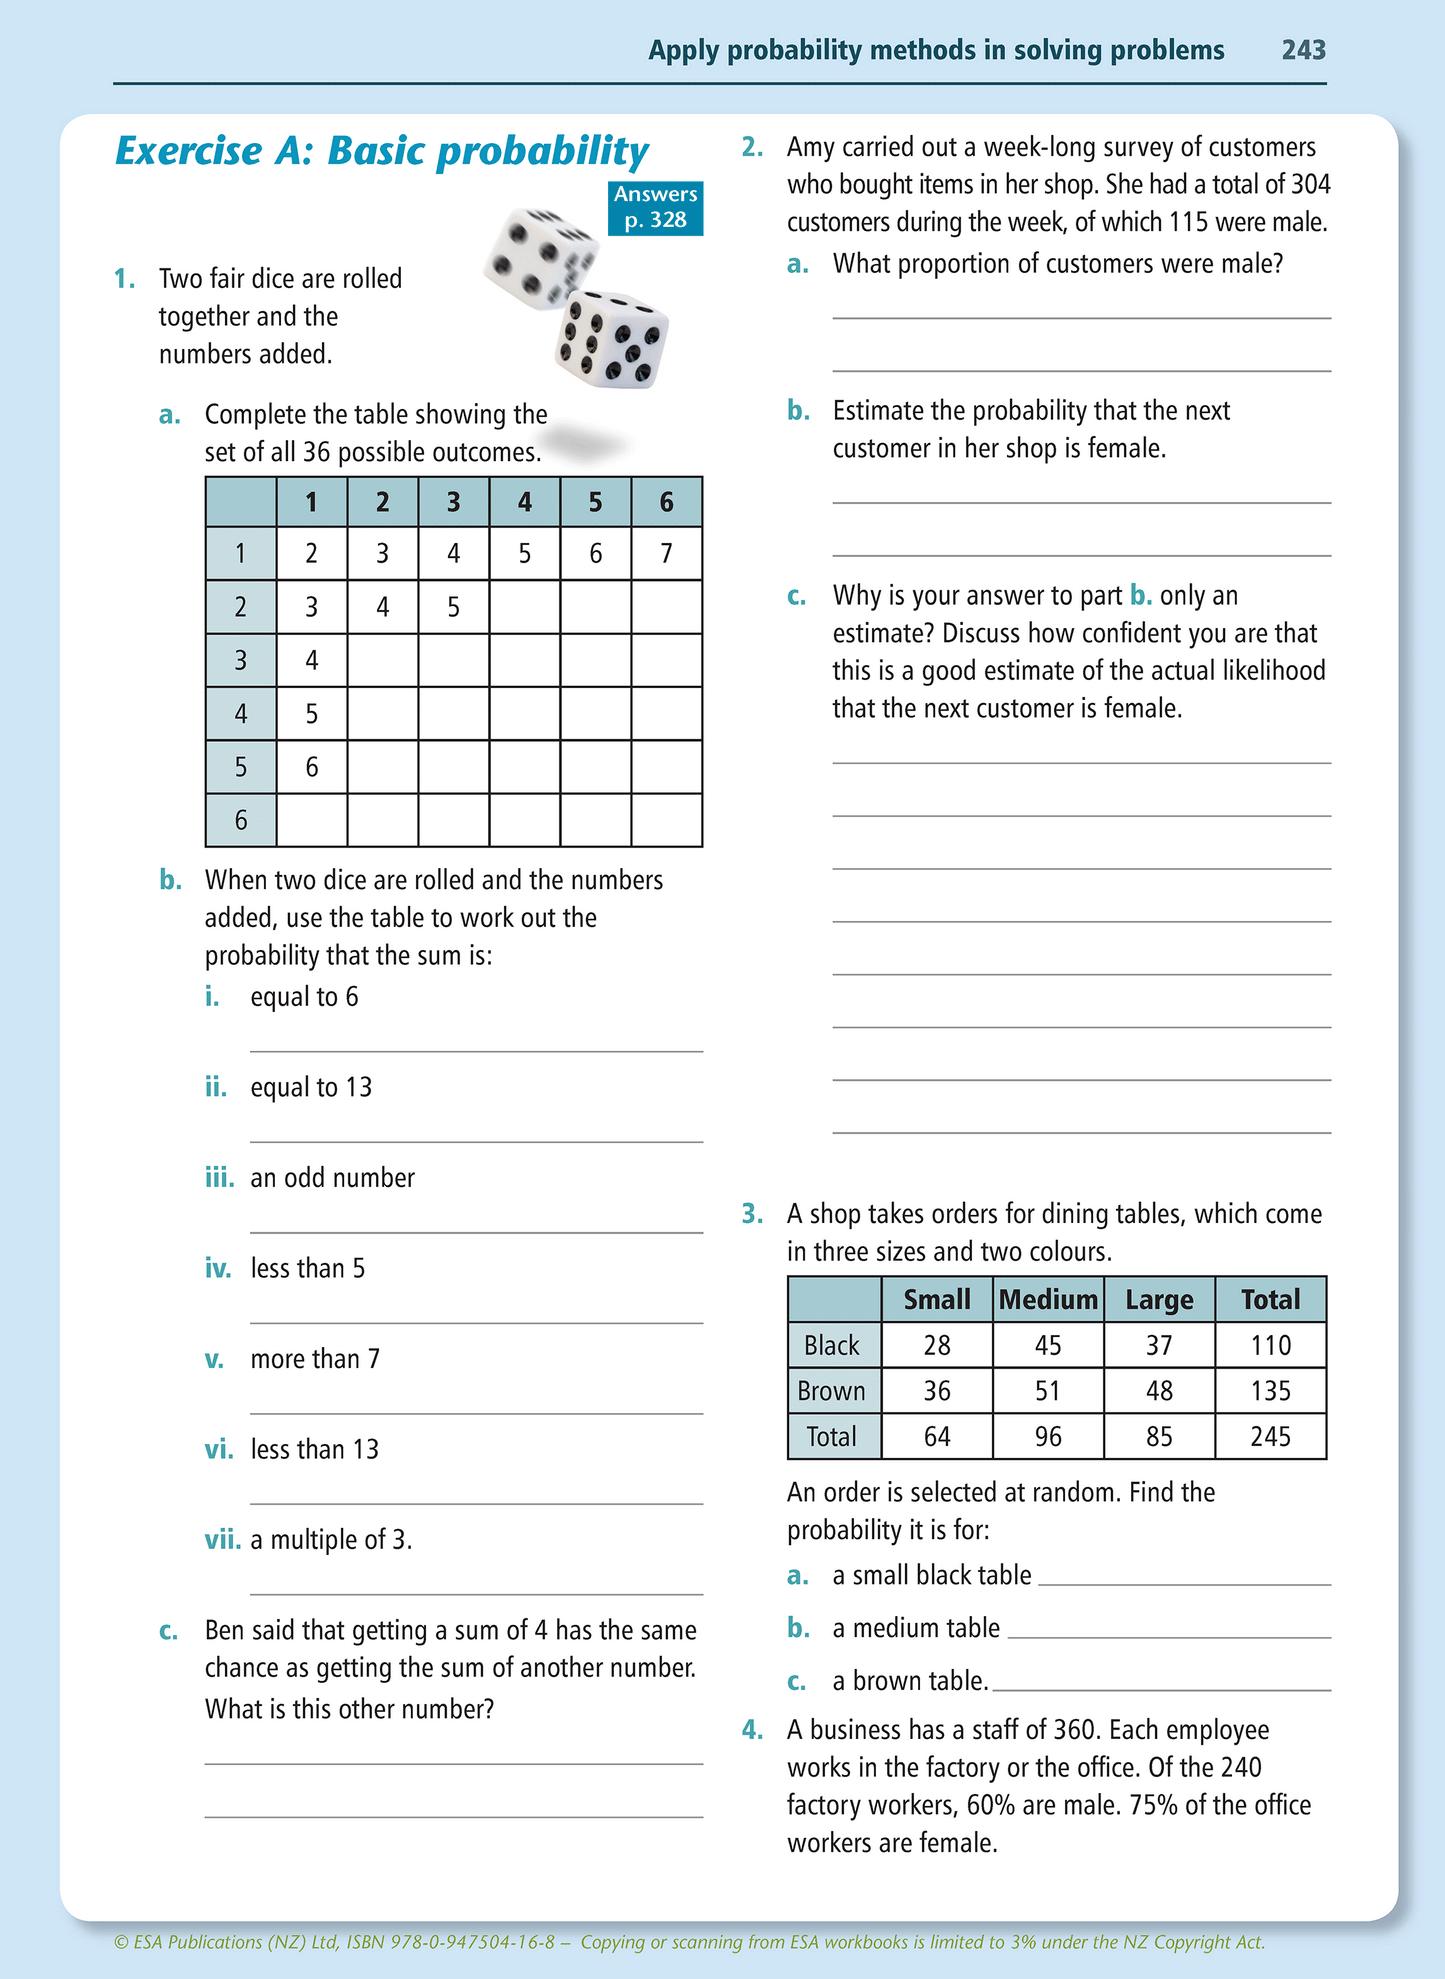 Level 2 Mathematics and Statistics Learning Workbook